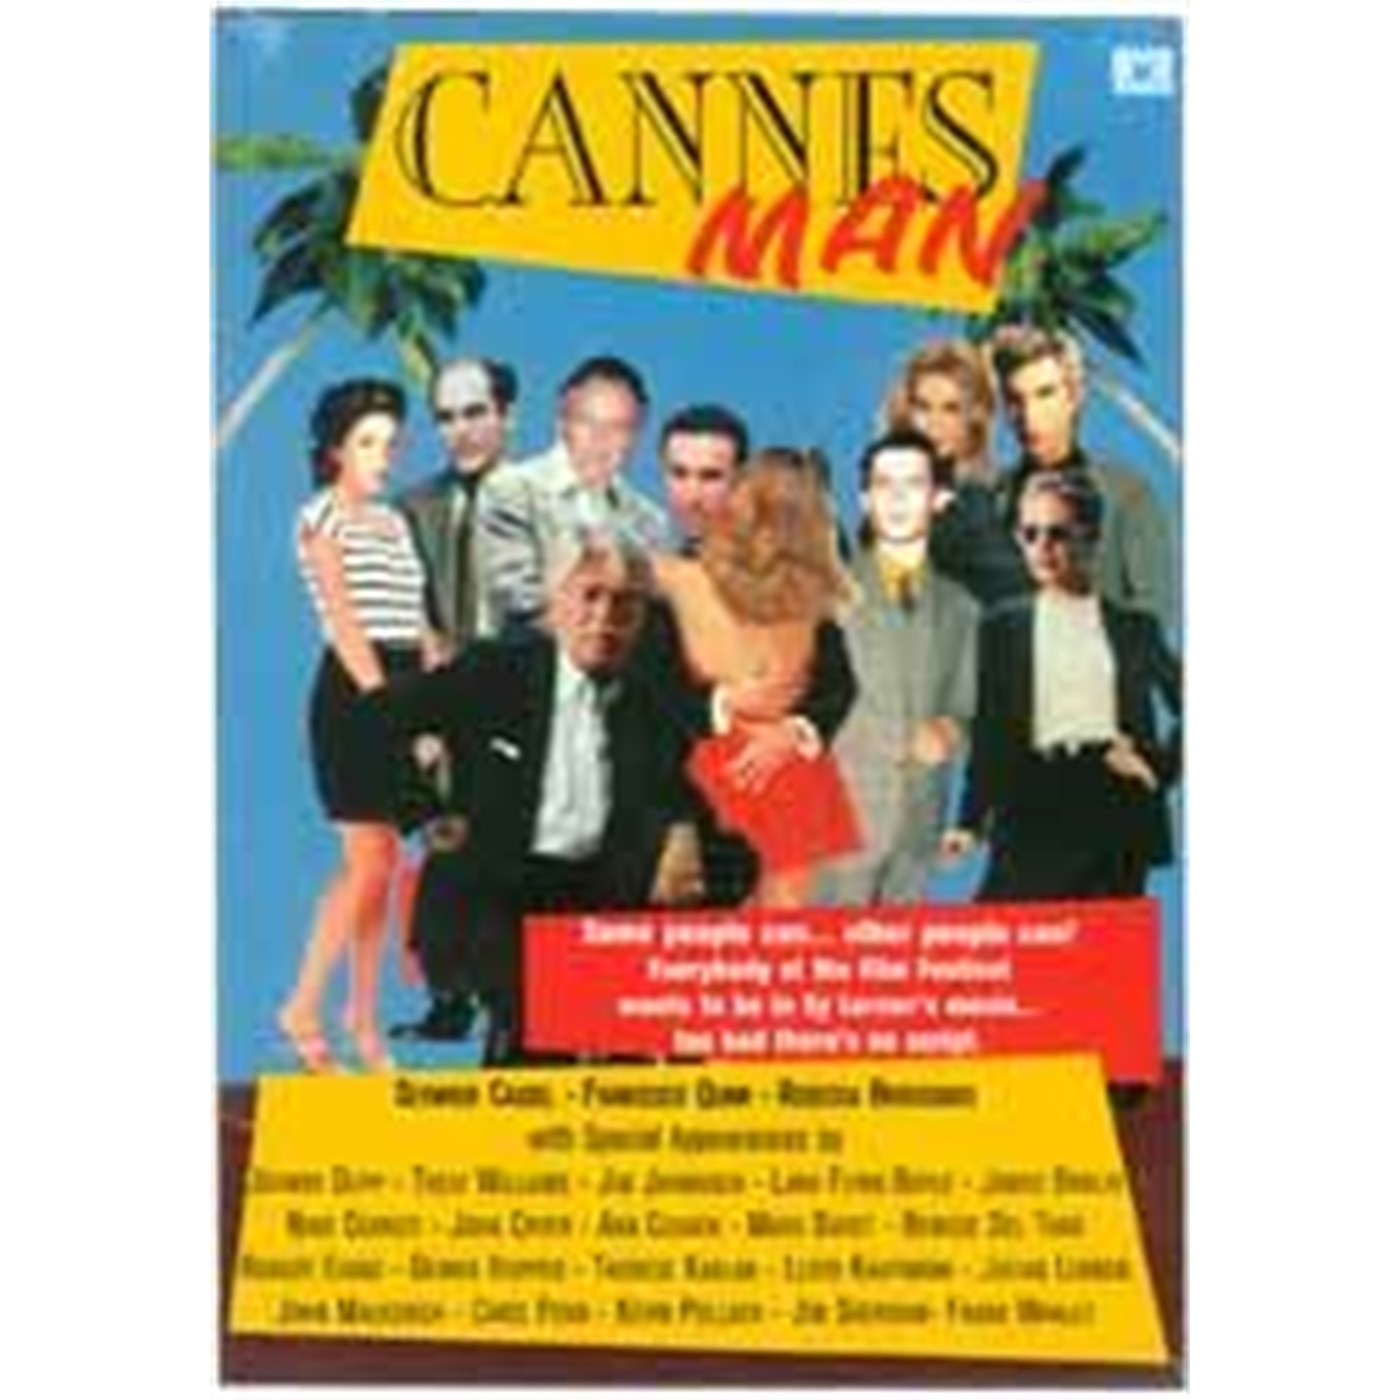 Cannes Man DVD